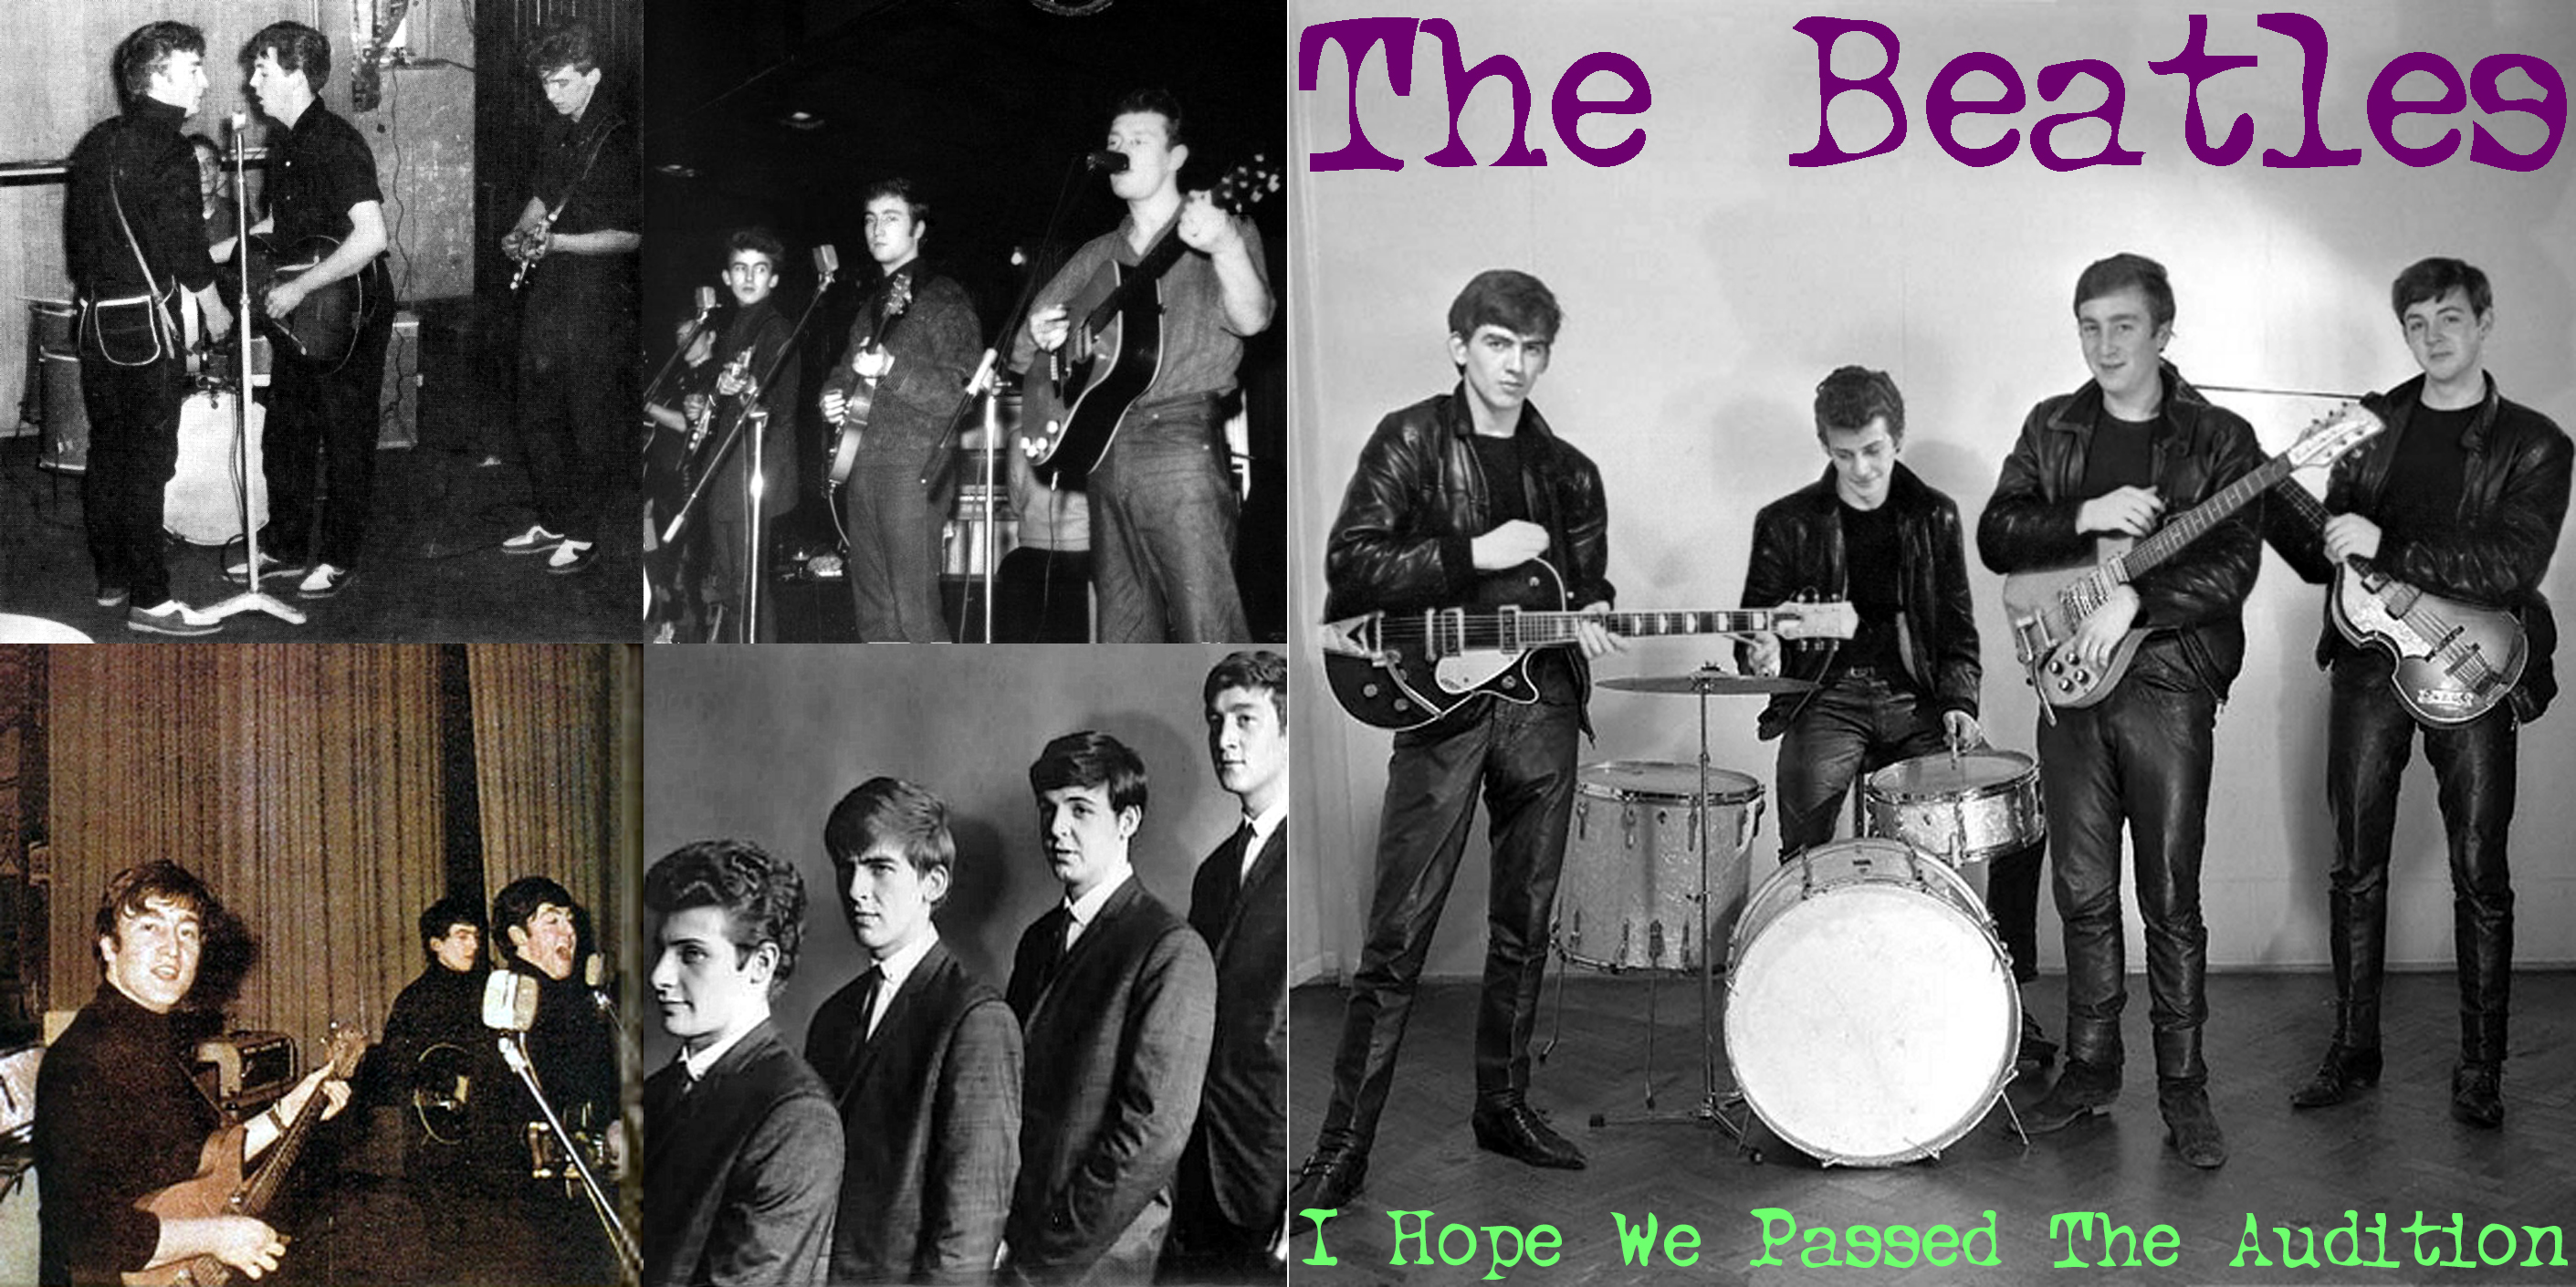 We passed. Audition группа. Фото Битлз в хорошем качестве. The Beatles Bootleg recordings 1963. Битлз 1962 год.